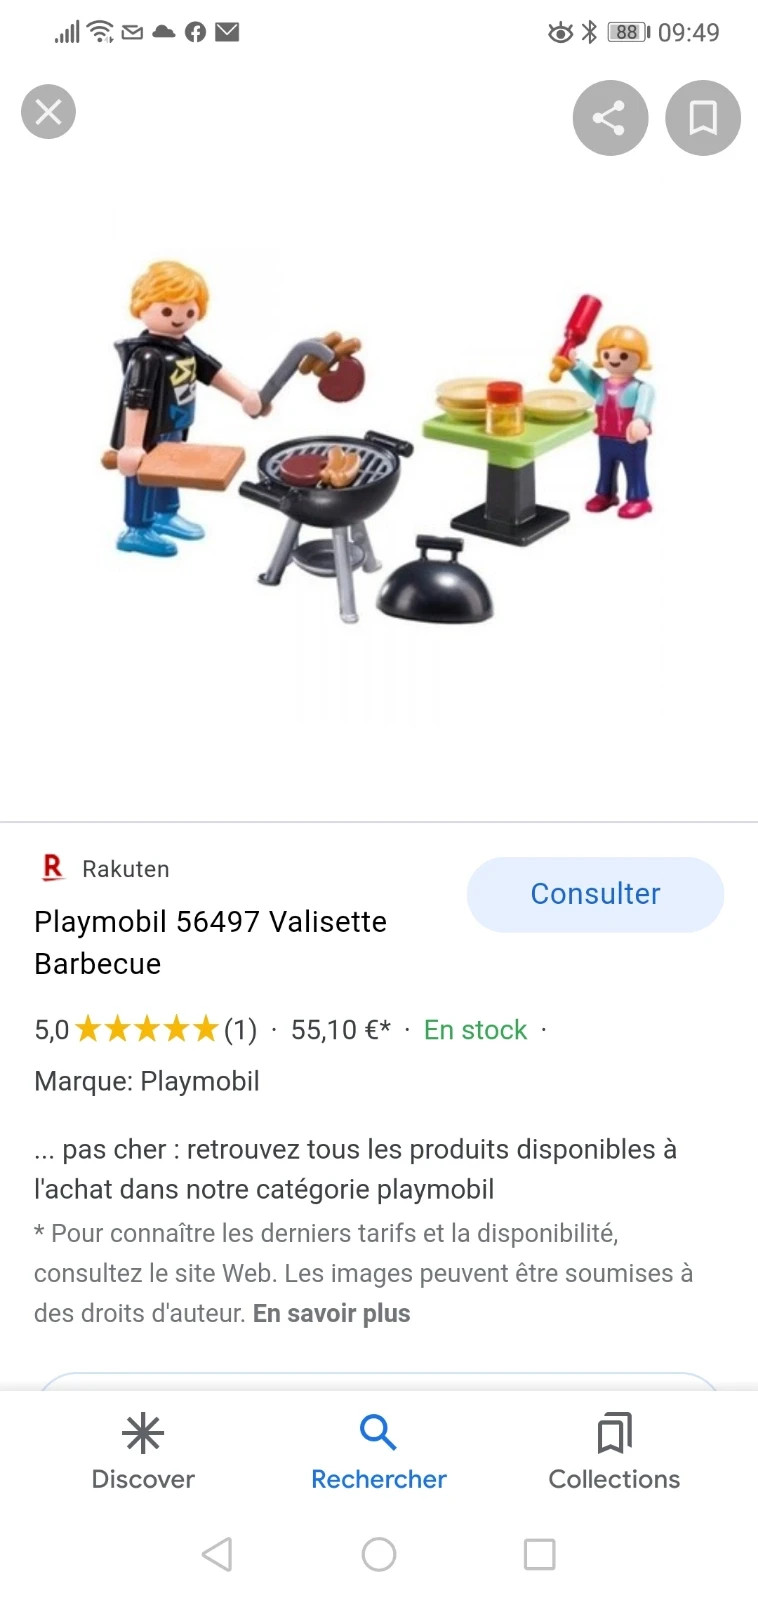 Playmobil Valisette Barbecue